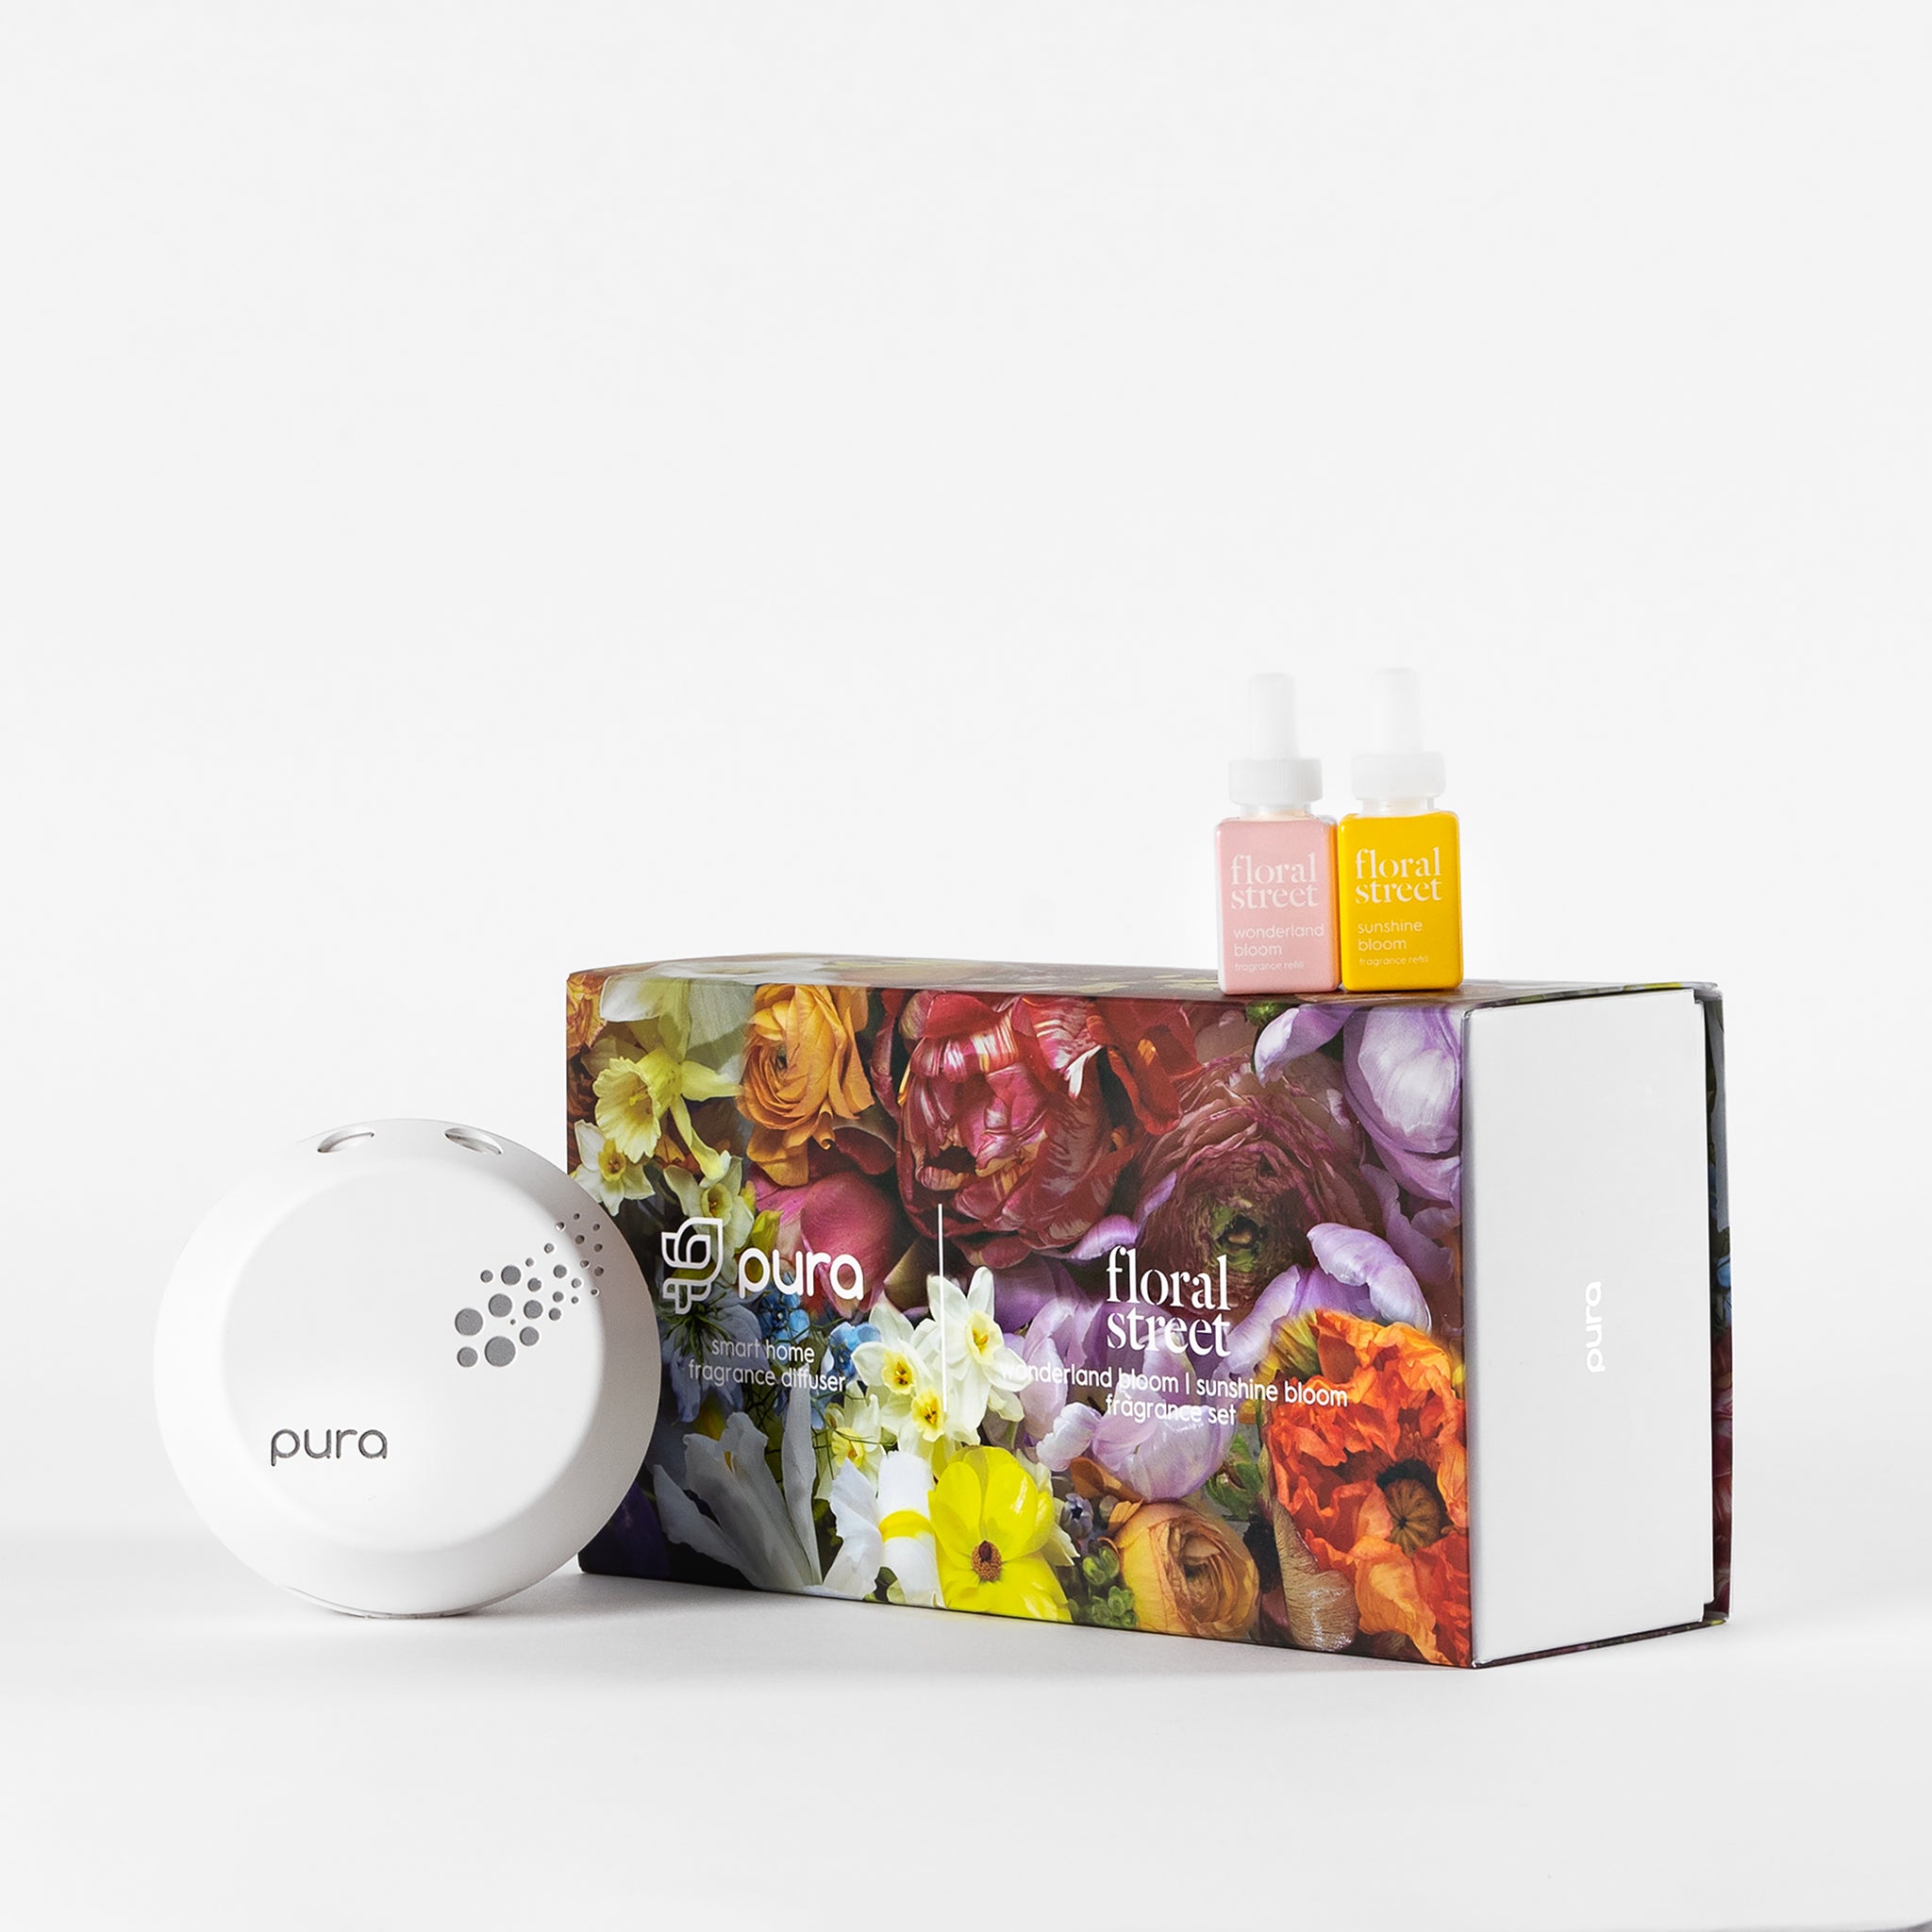 Pura Smart Home Fragrance Diffuser Bundle